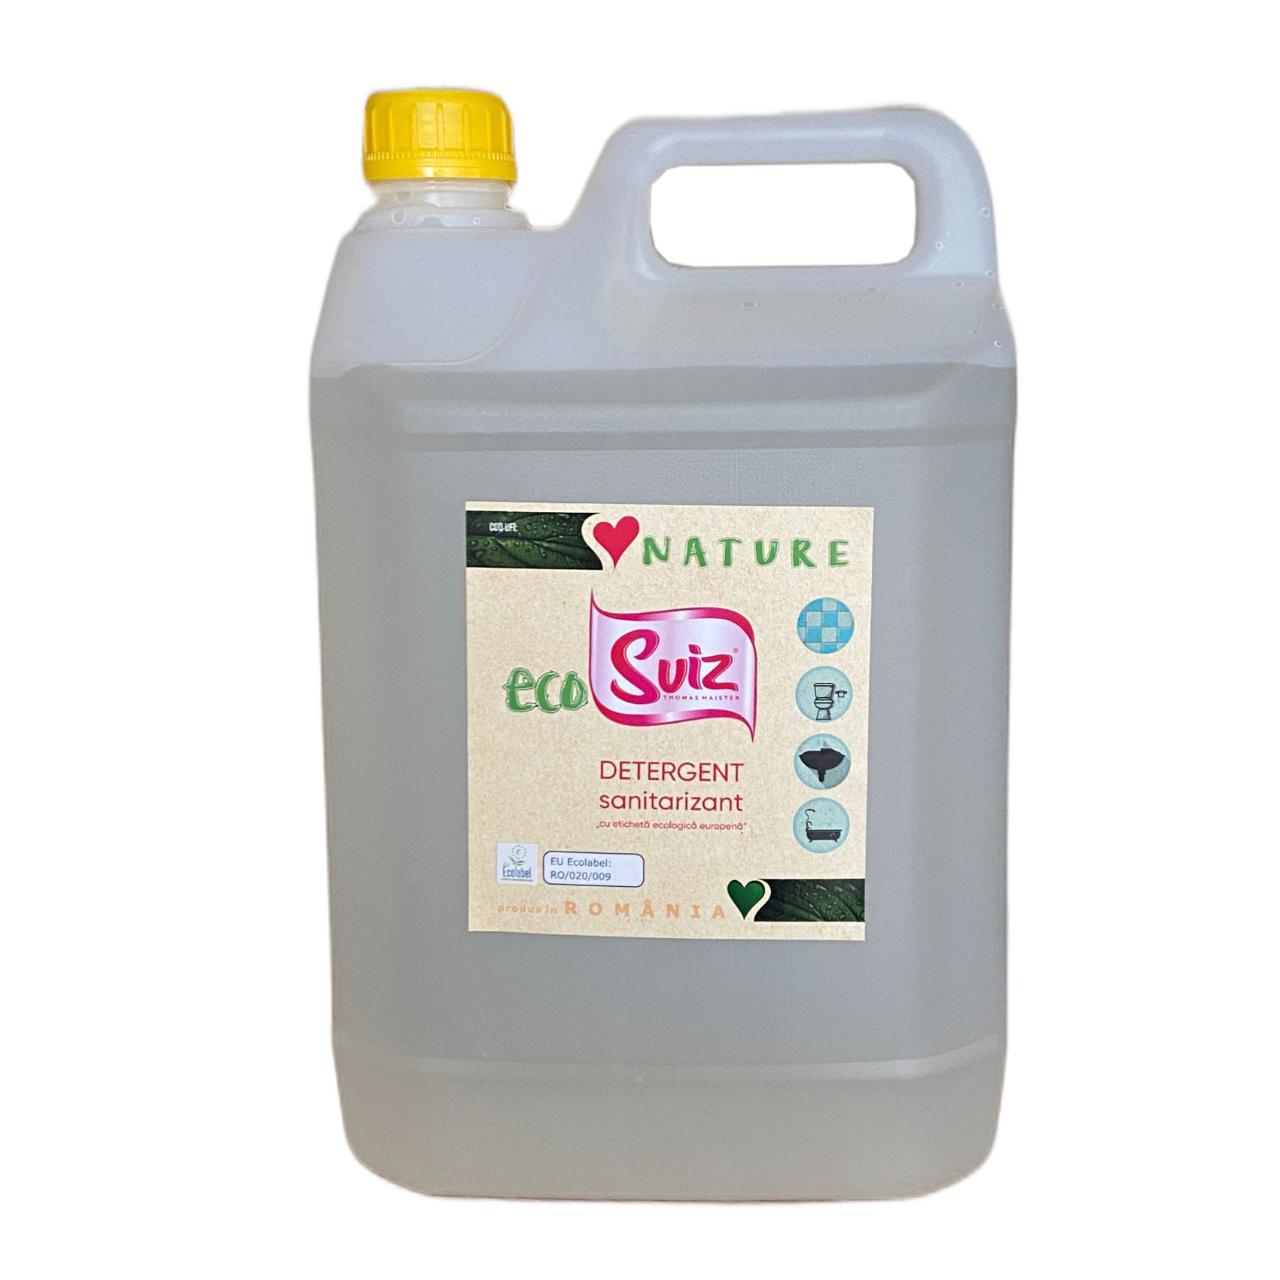 Detergent sanitizant pentru bai Ecosviz, 5 L